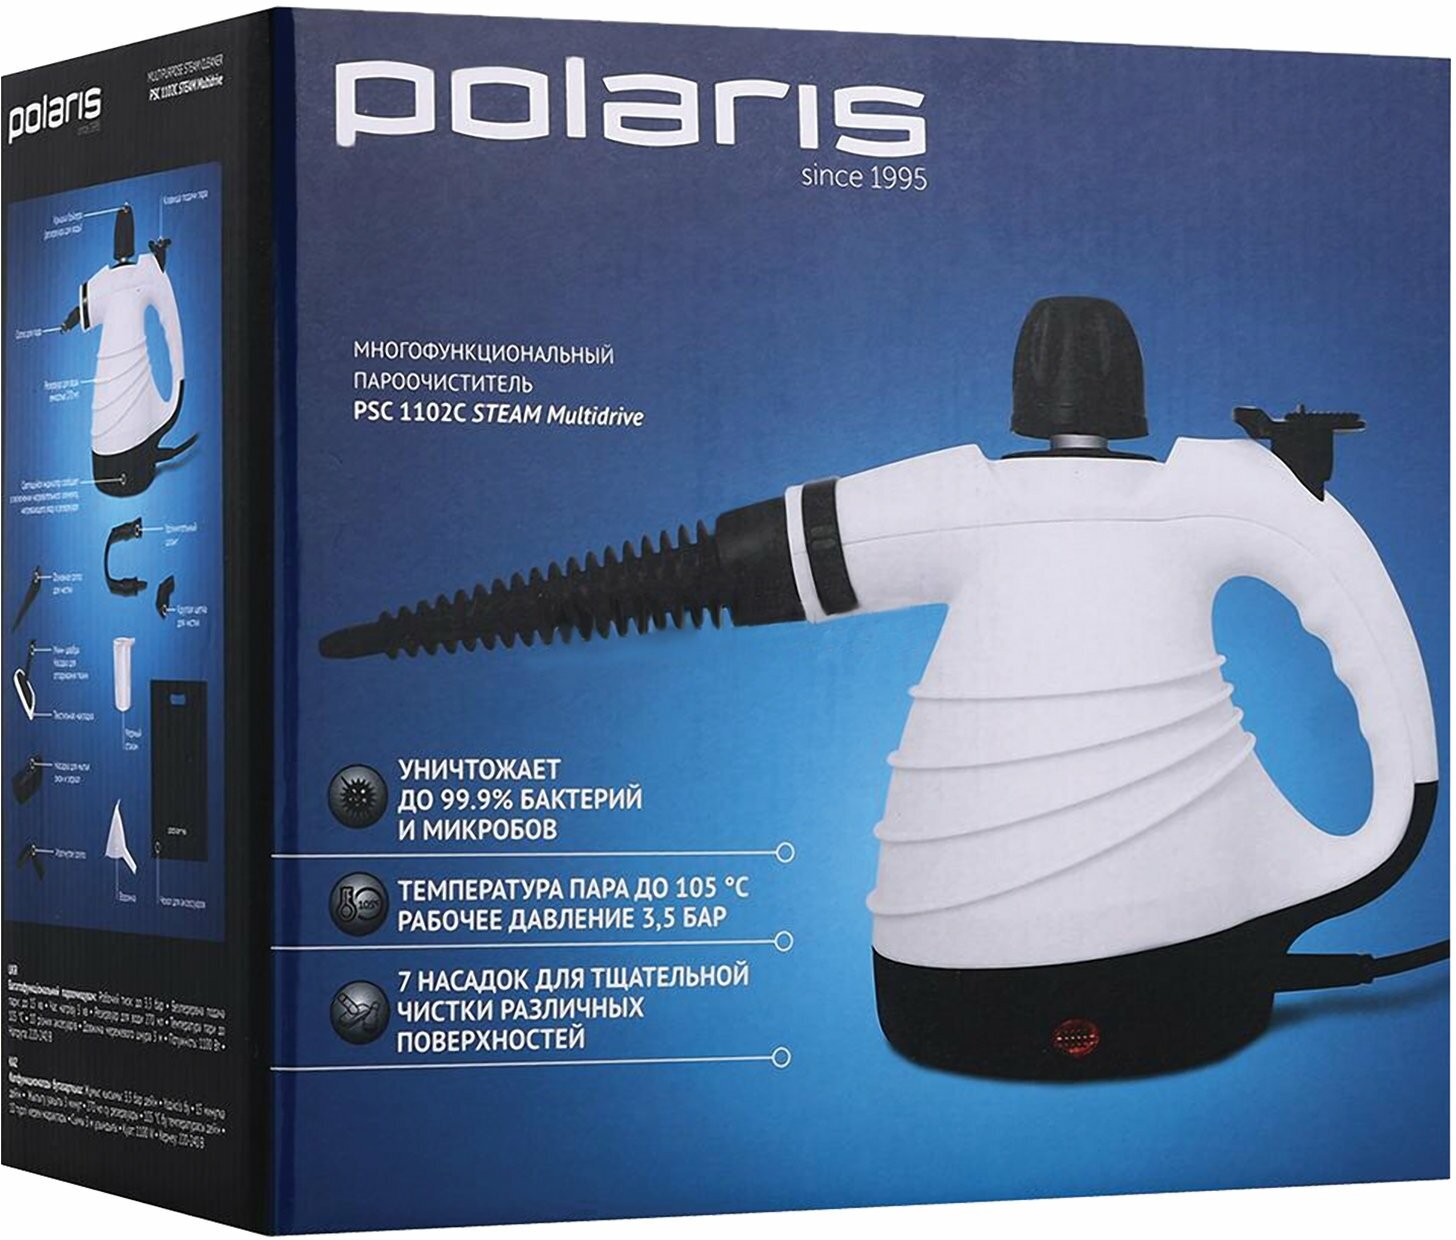 Polaris steam multidrive фото 12